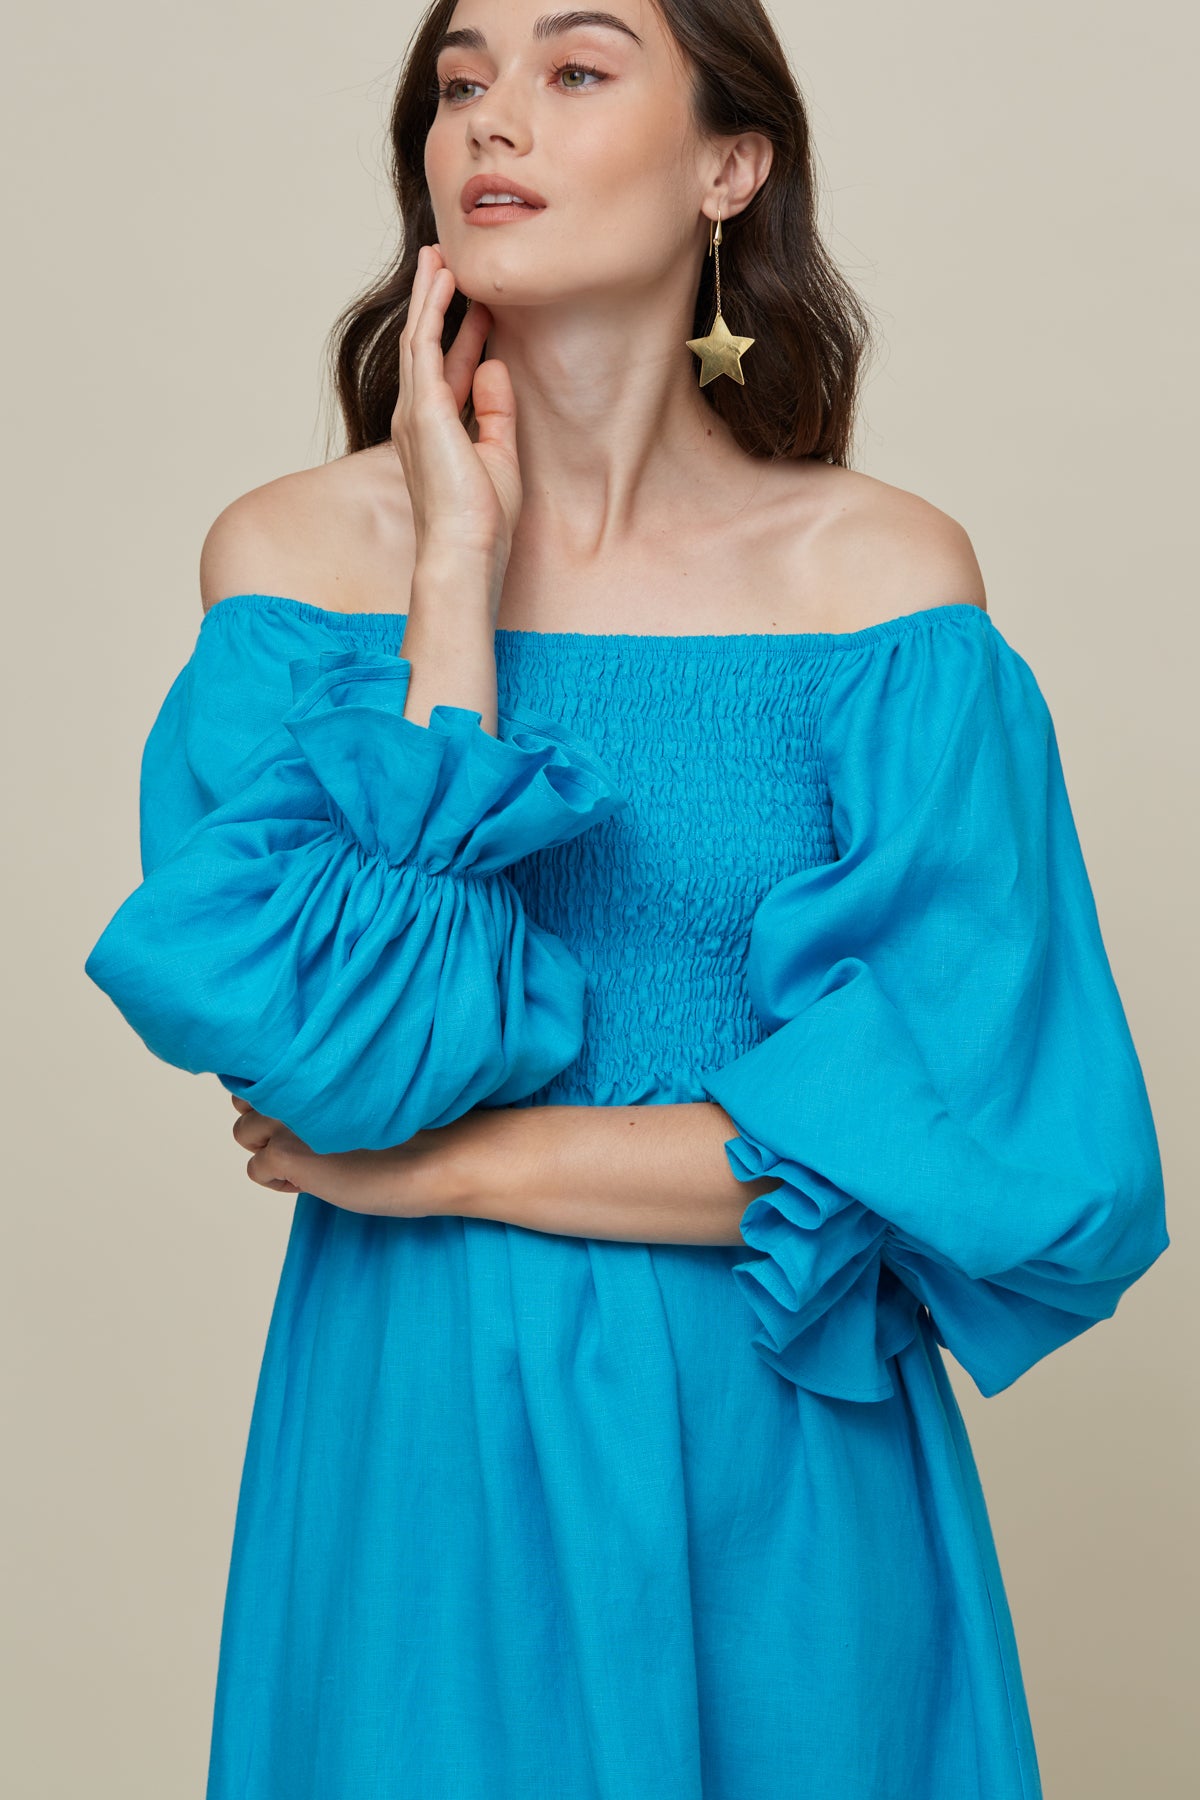 Galeria-Hortencia Turquoise Dress-Justbrazil